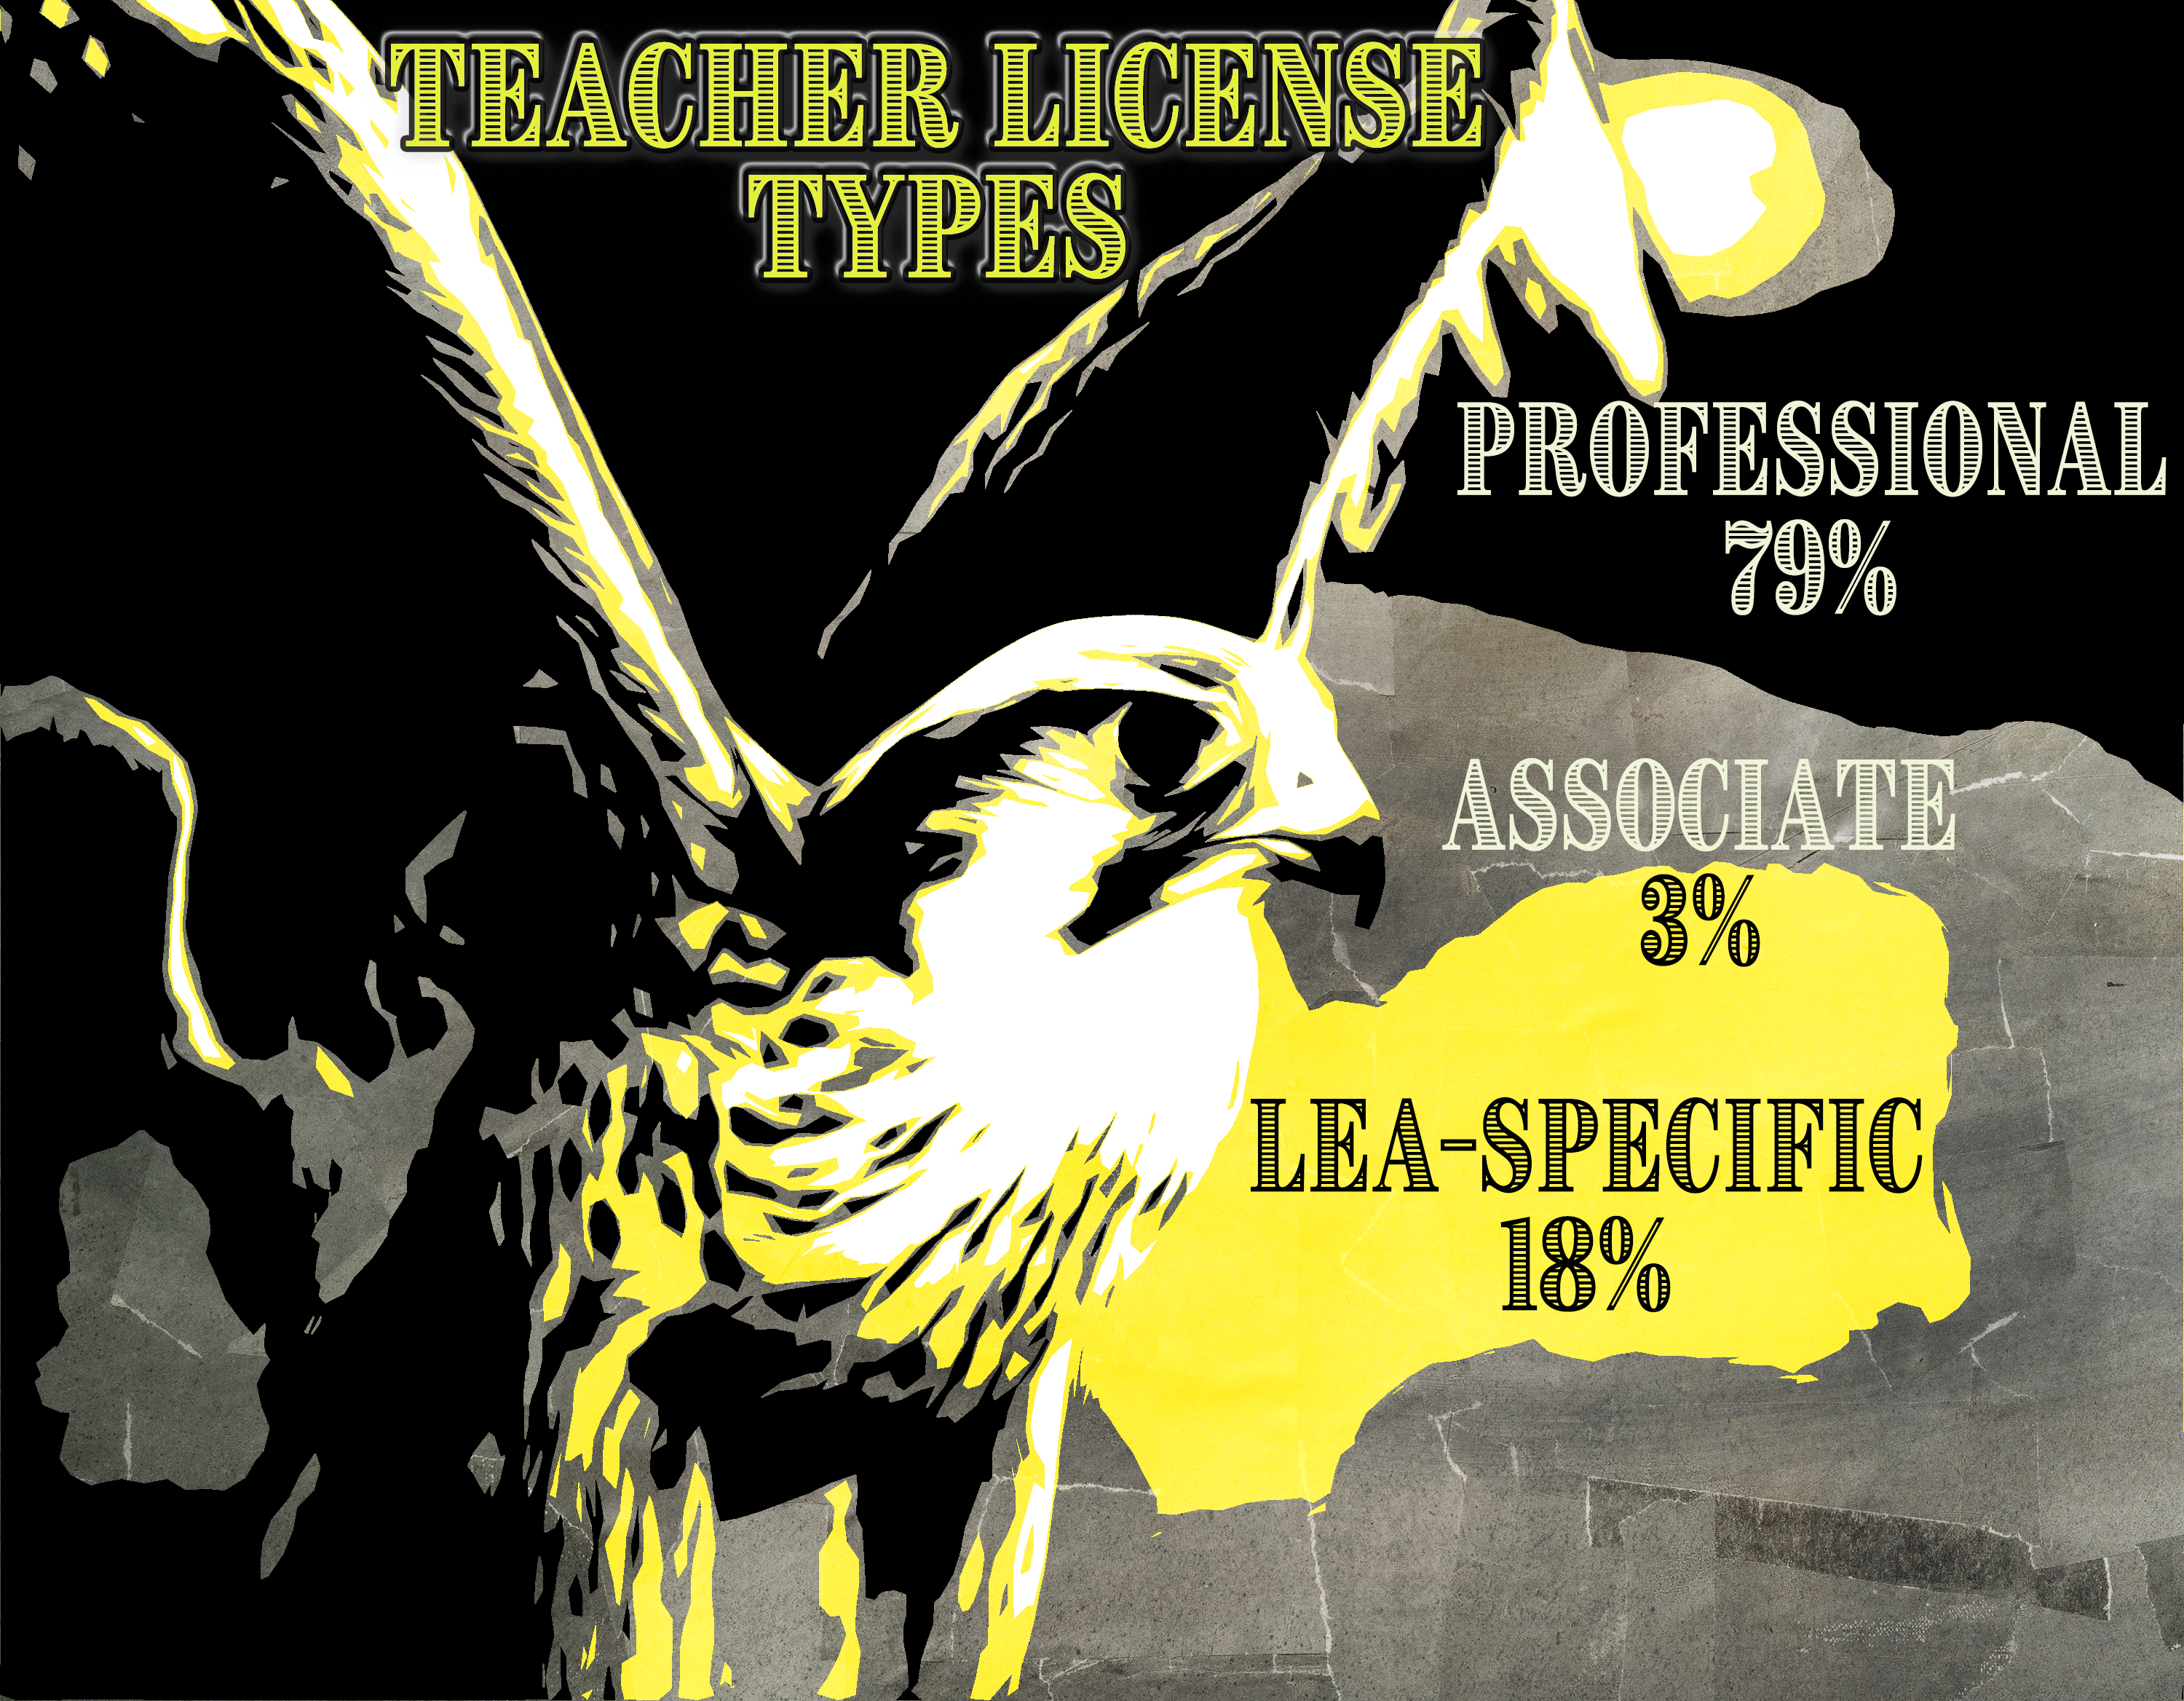 CES Teacher License Types